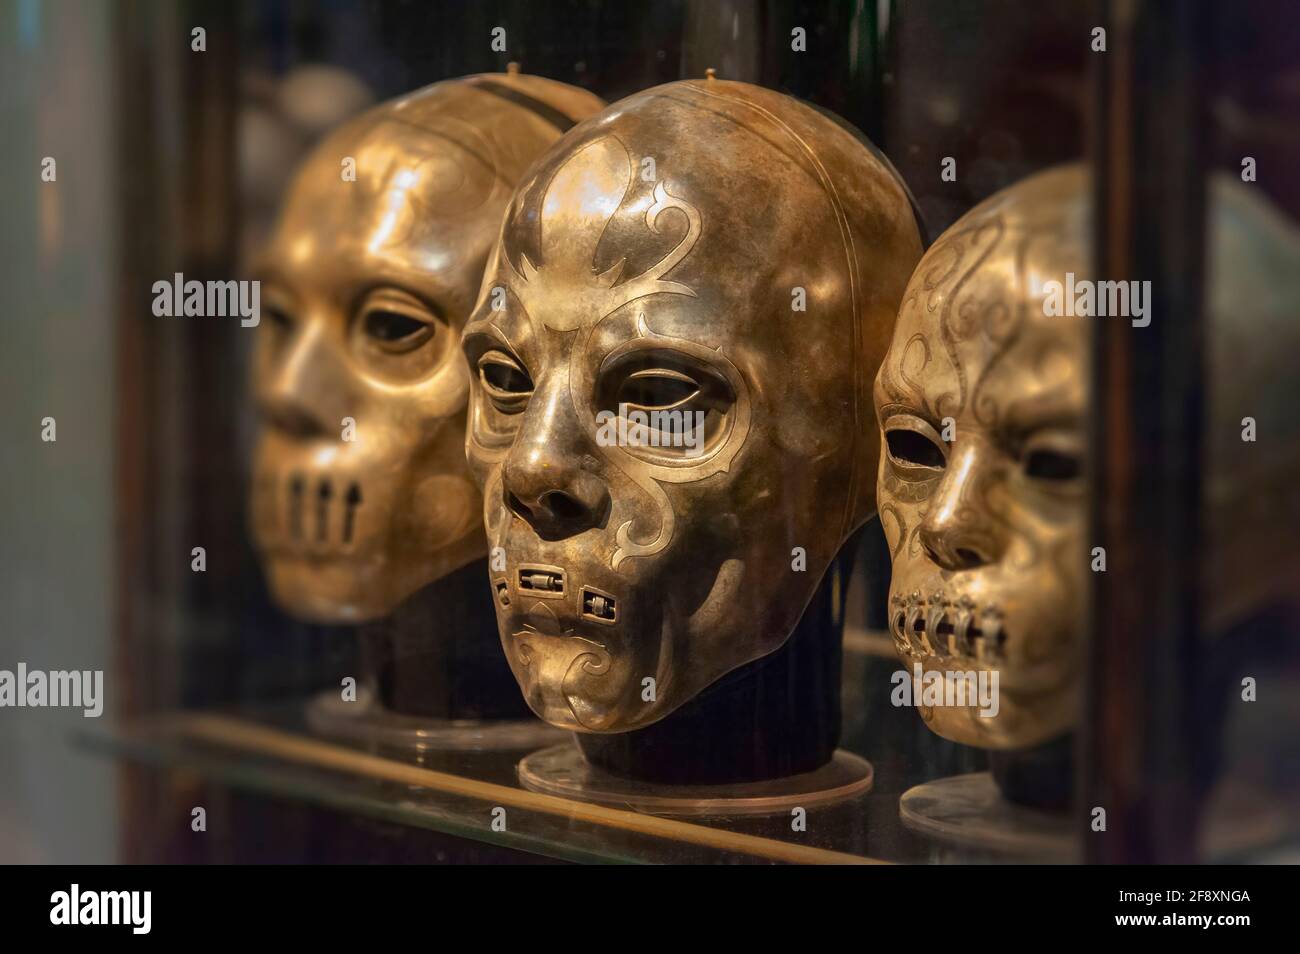 Death Eater Masks in display case at The Making of Harry Potter Studio Tour. Warner Bros. Studios, Leavesden, London UK Stock Photo